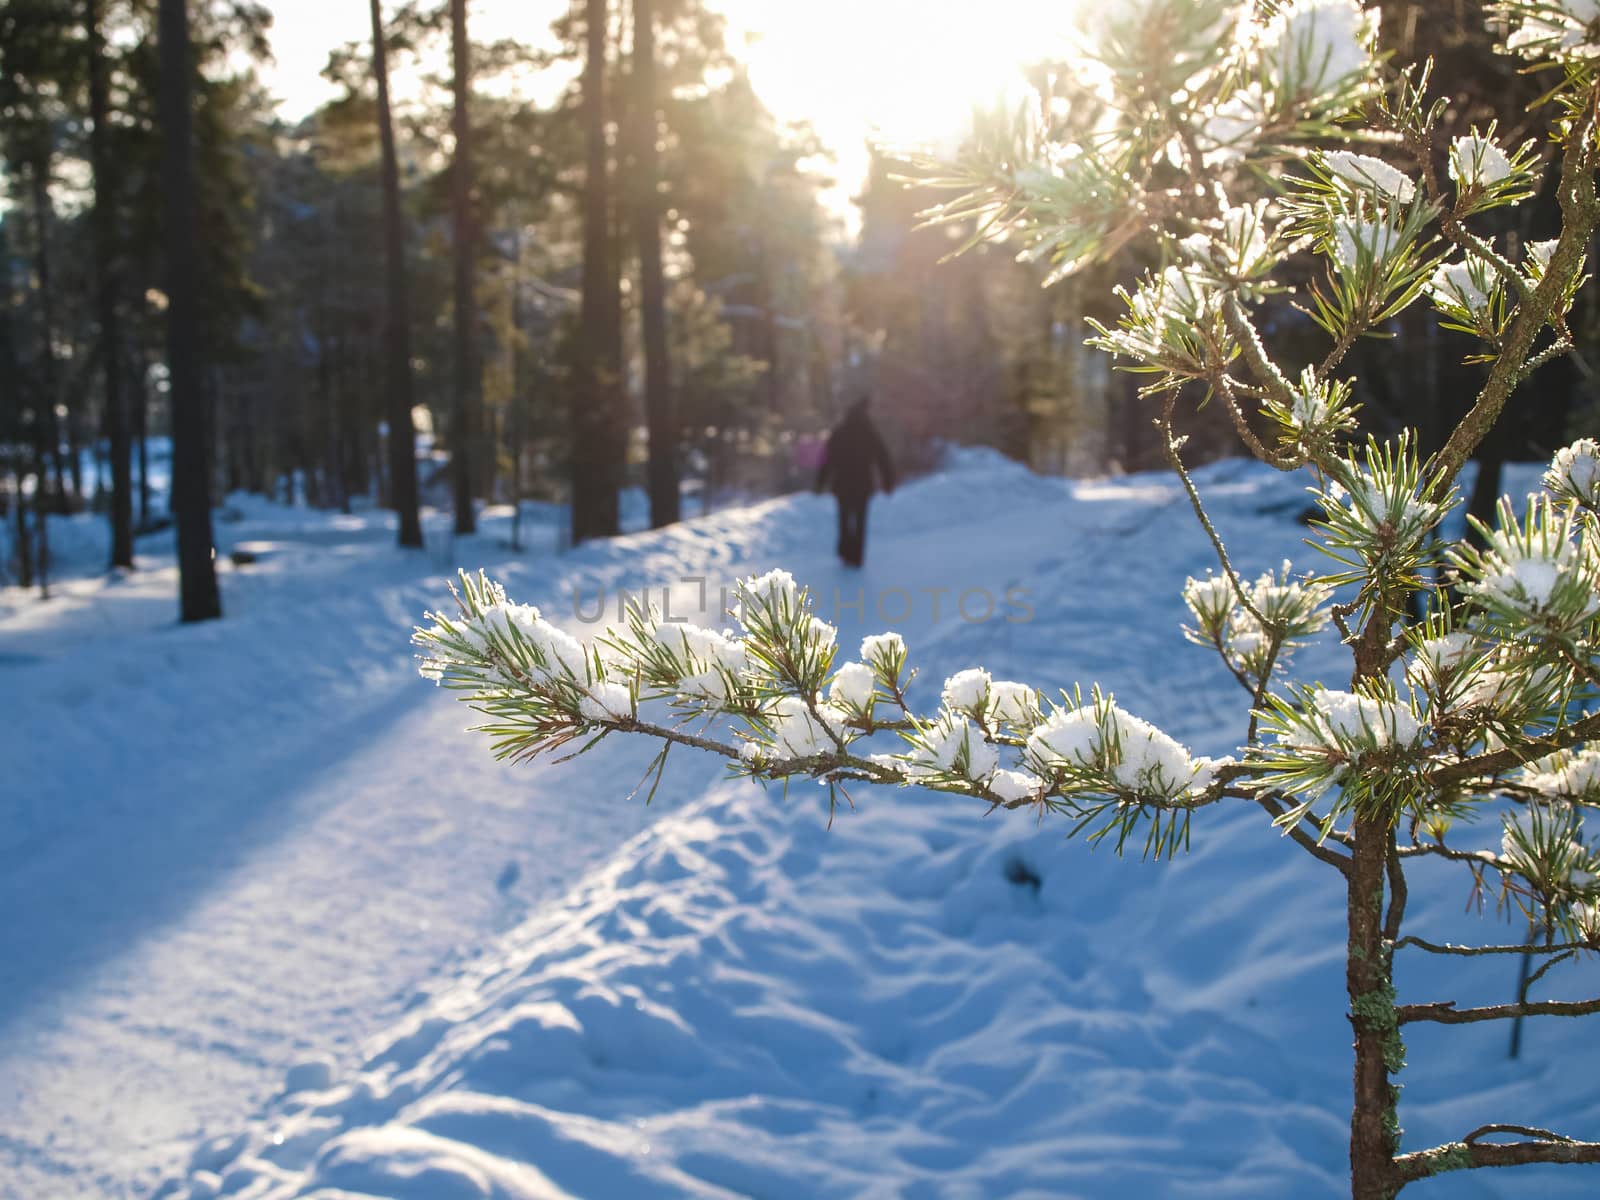 Fresh snow in little spruce tree, in front of sunlight onto wintery roads